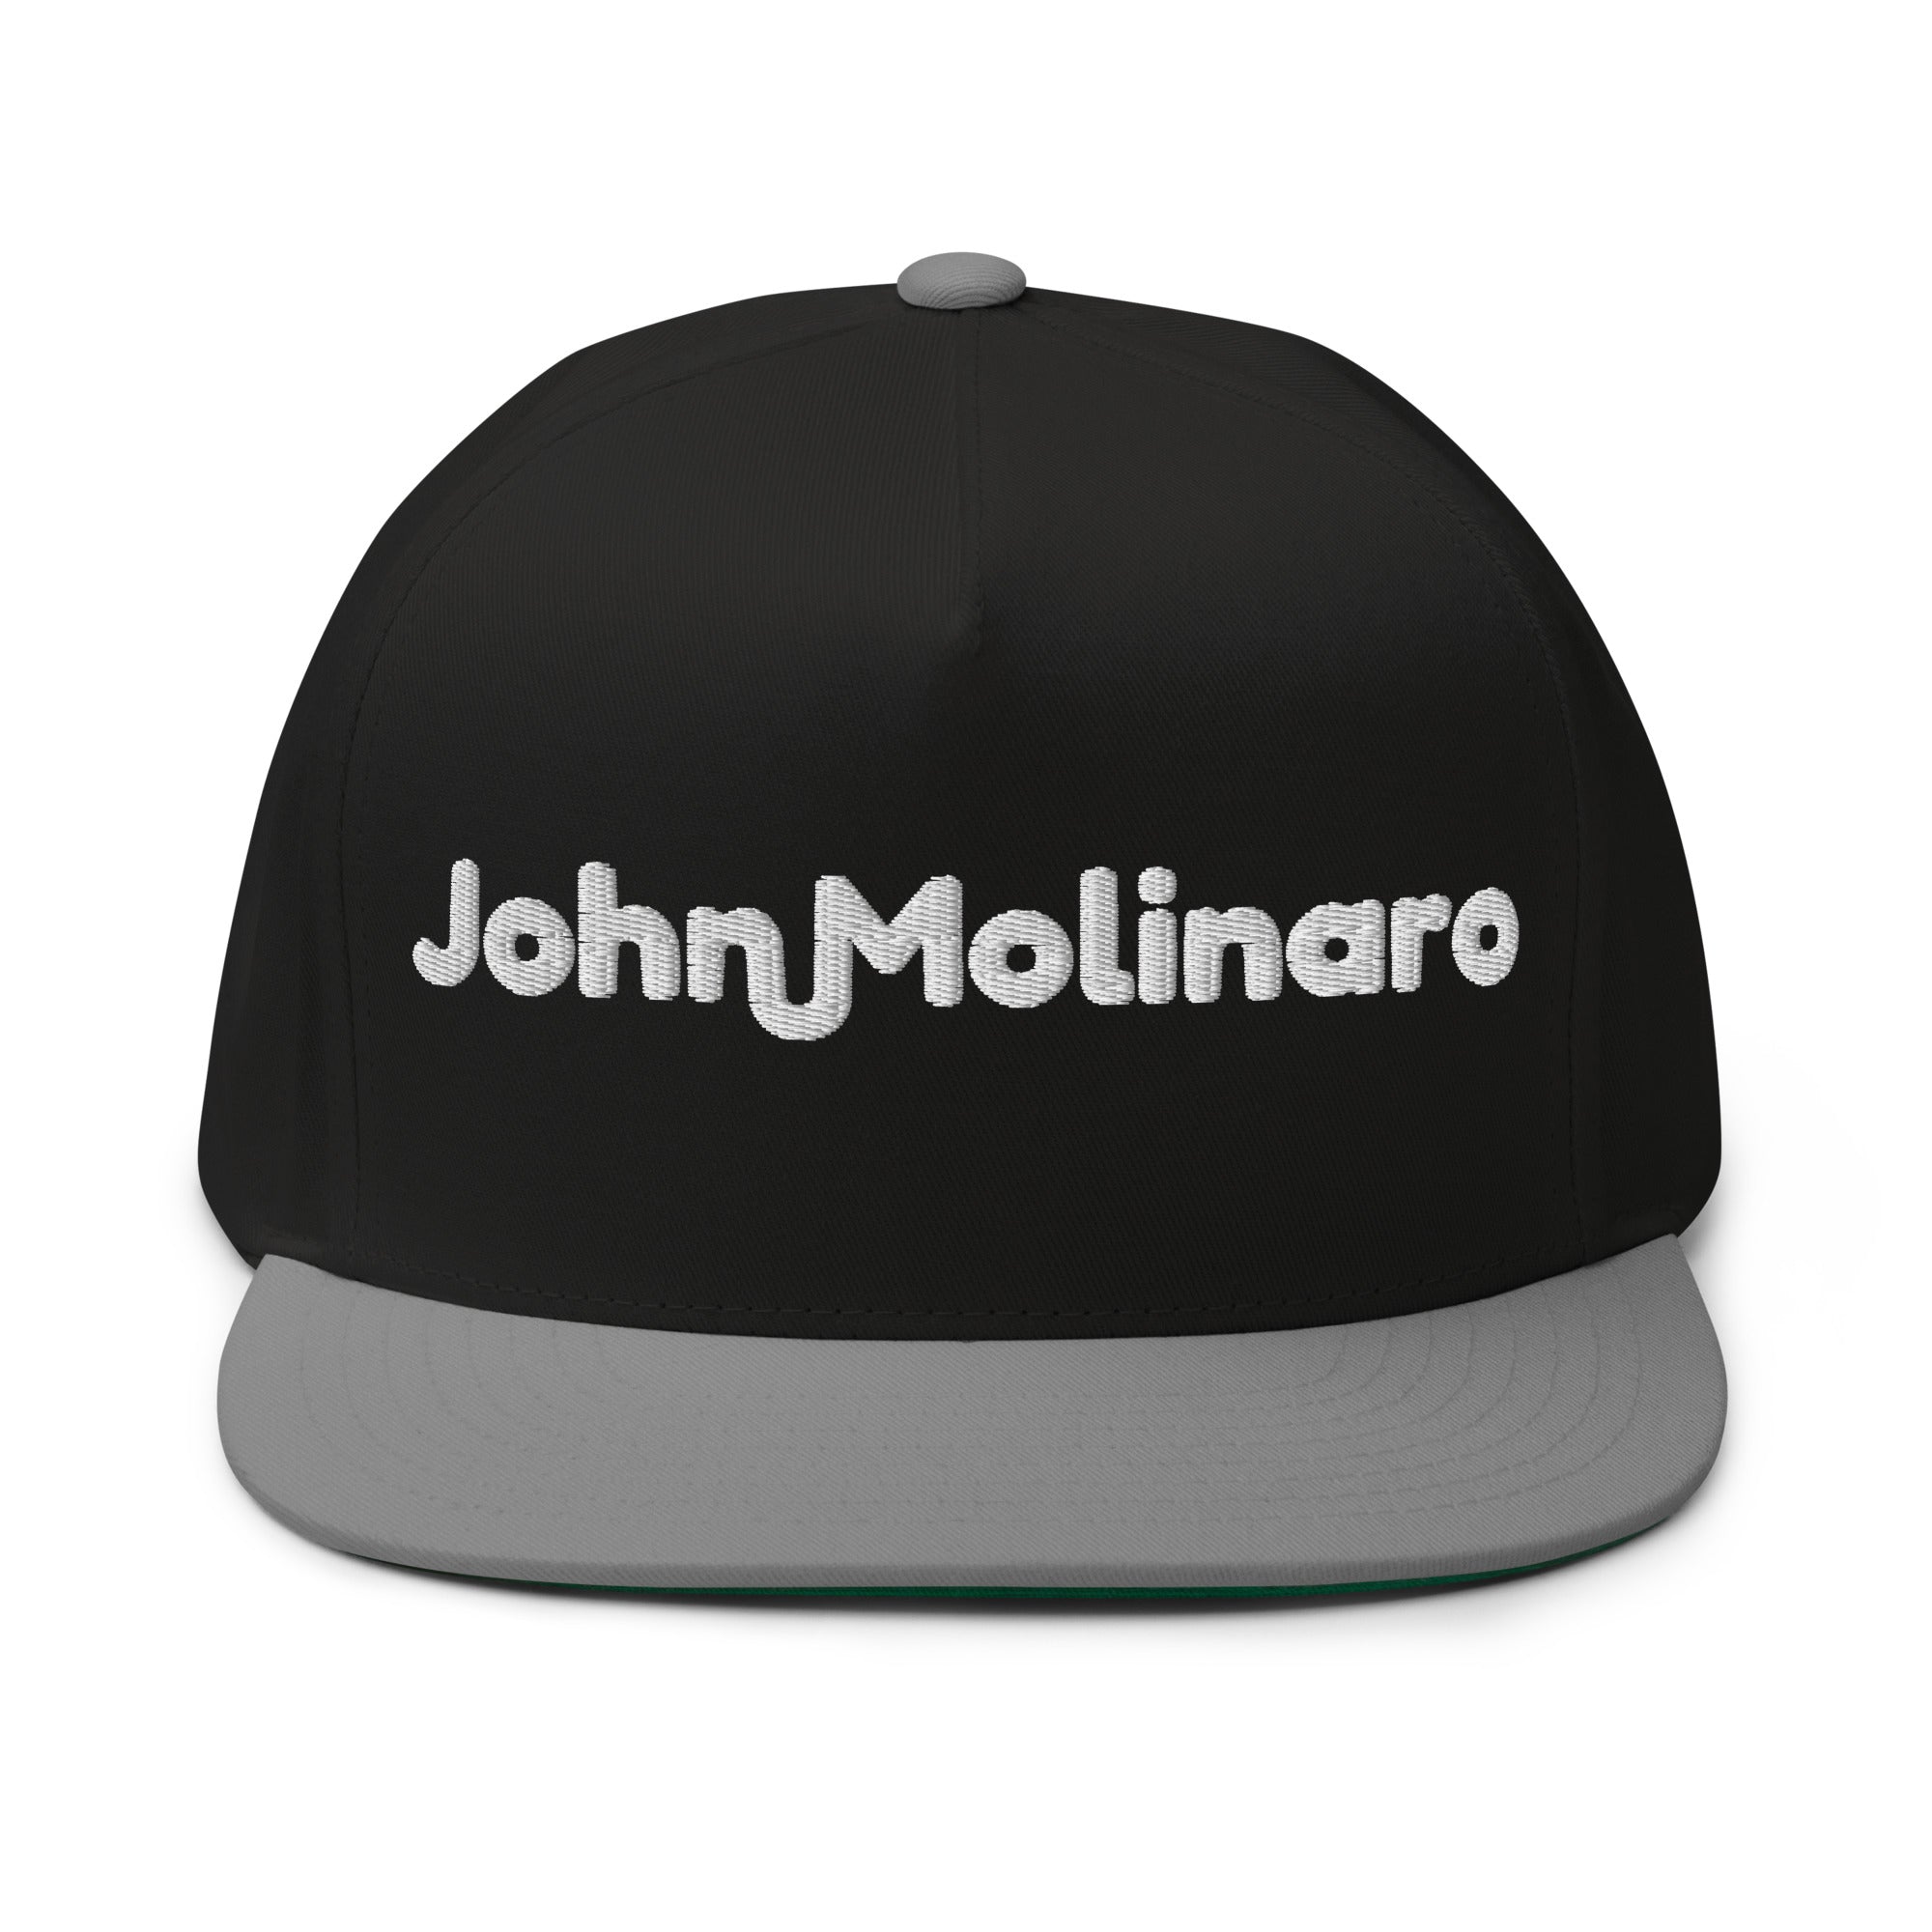 John Molinaro - Cap